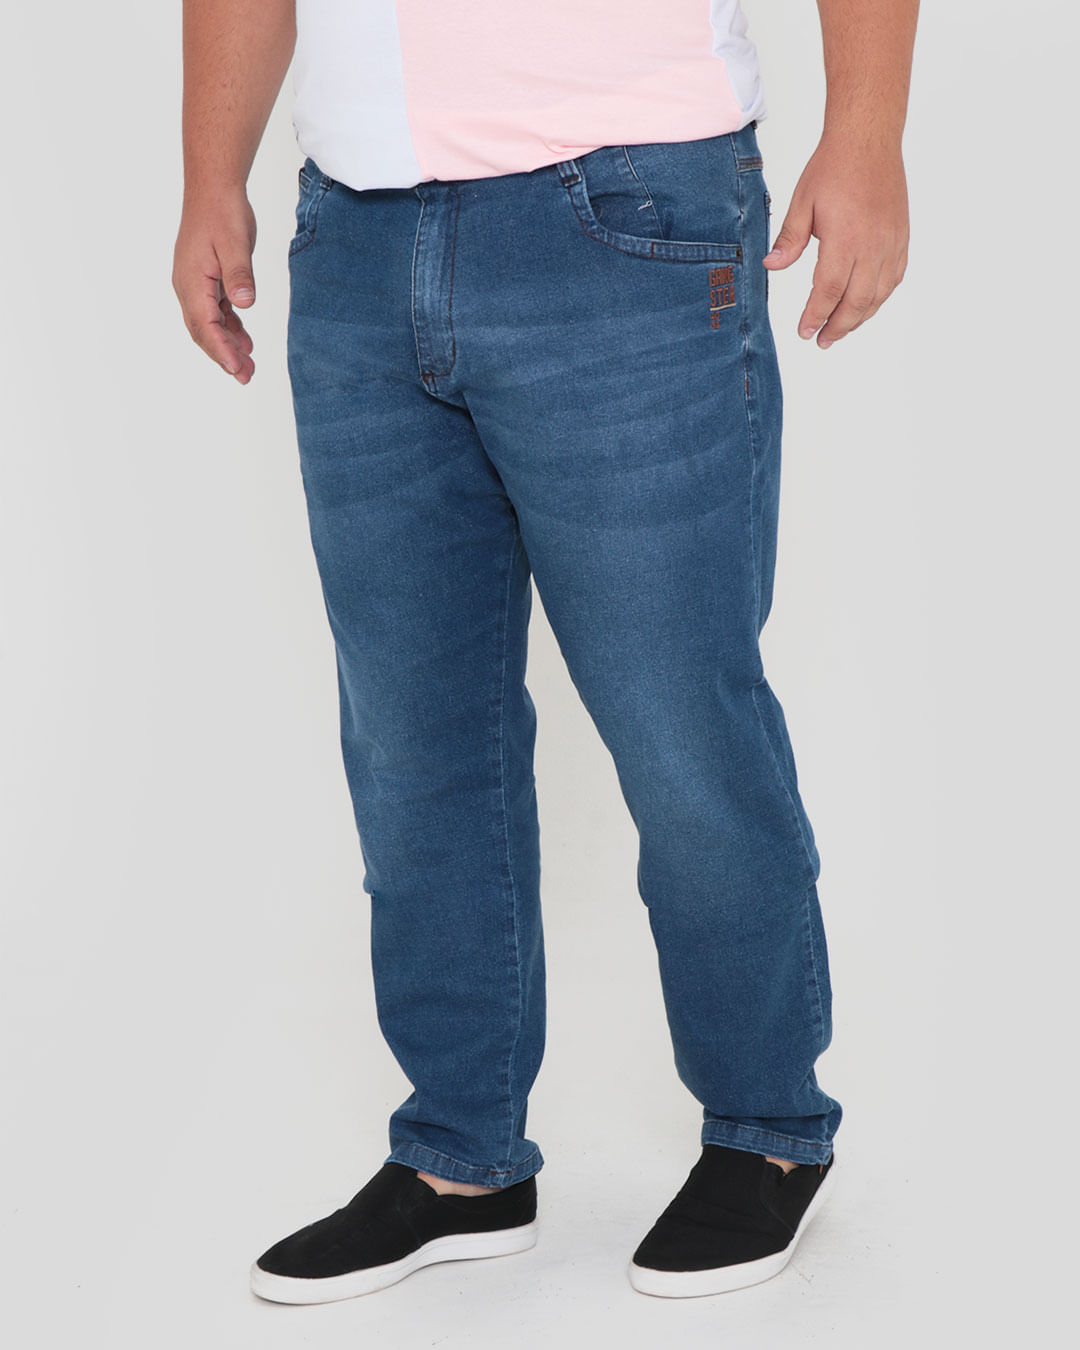 23321000198045-blue-jeans-medio-1